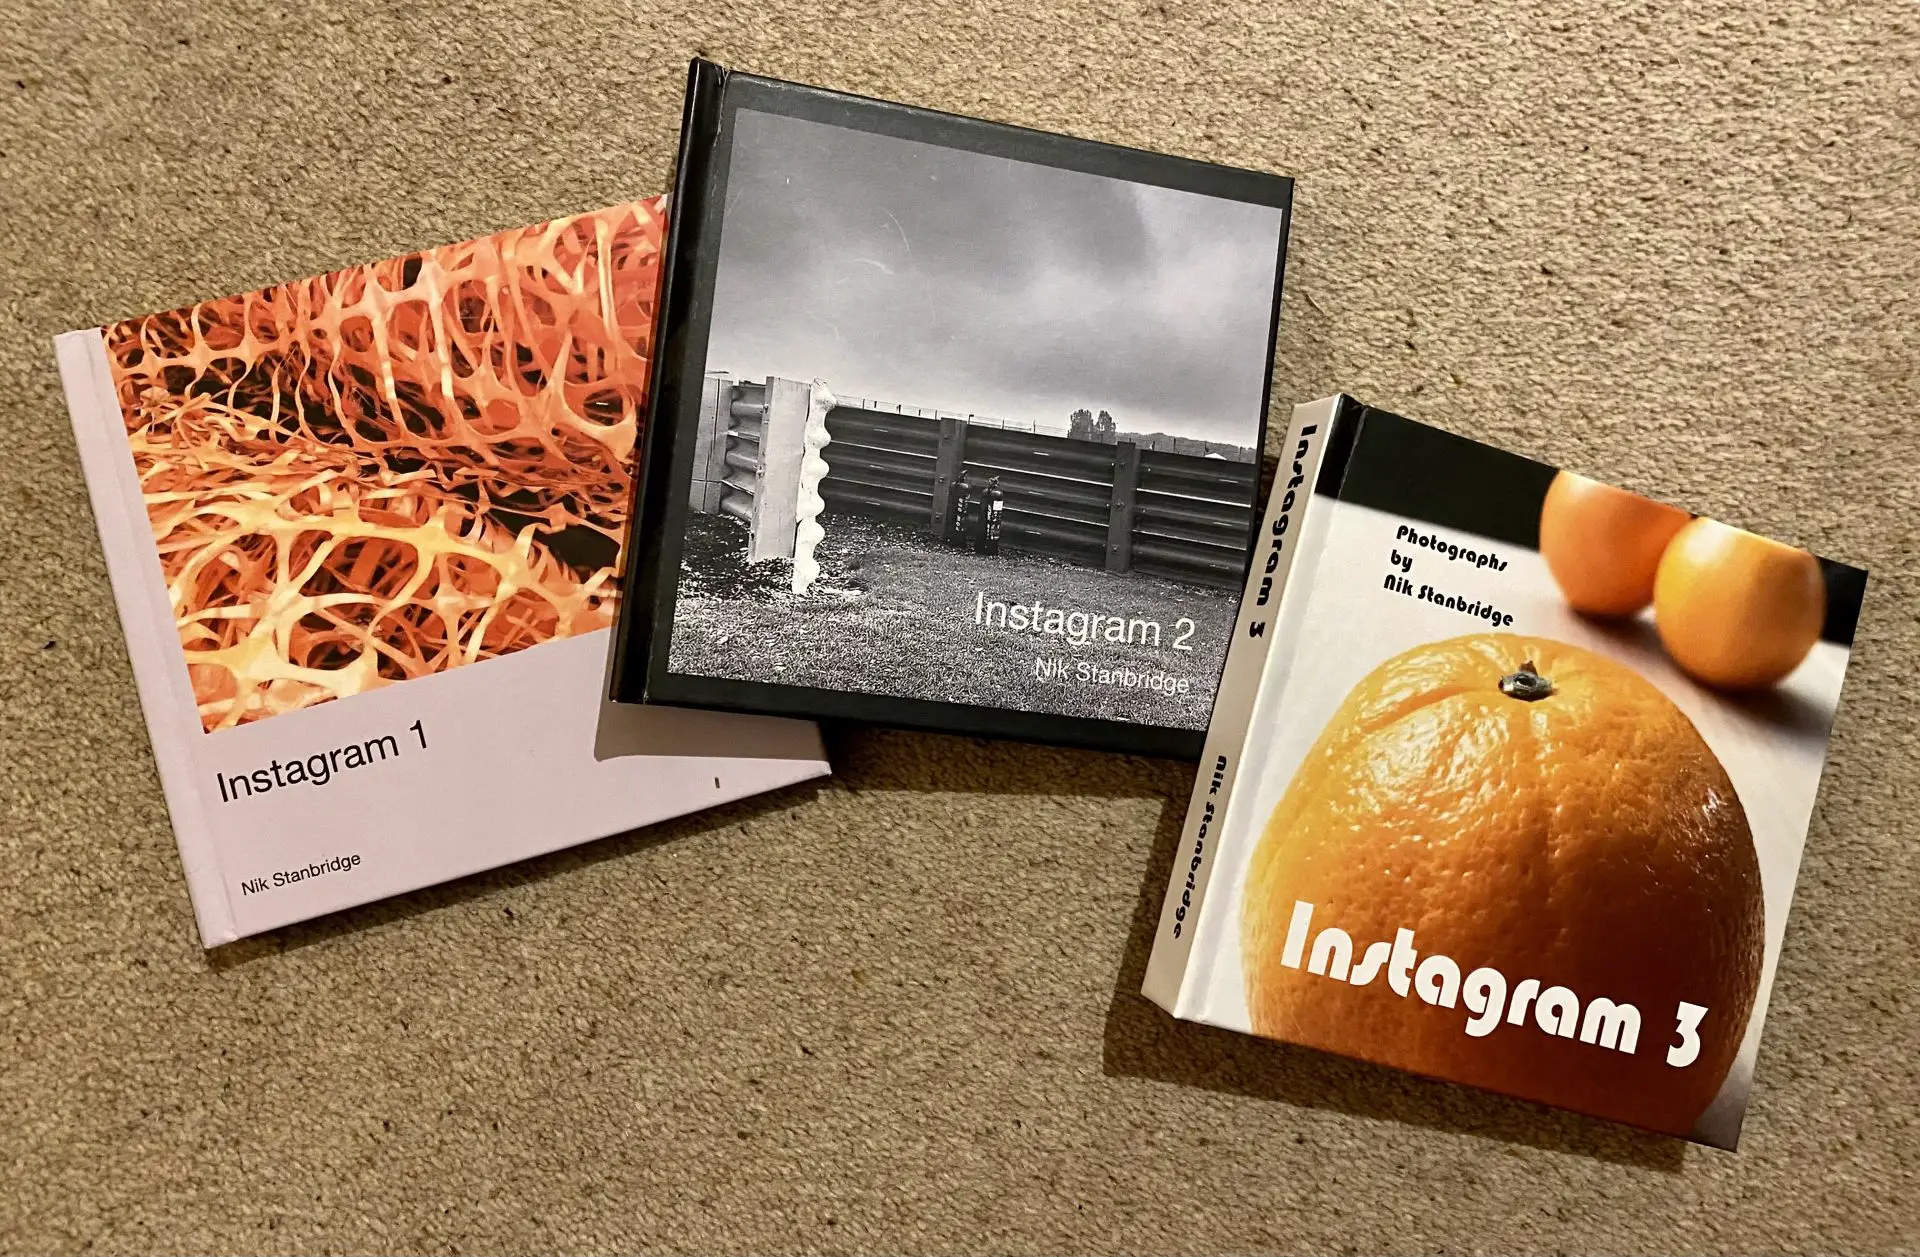 Three Instagram photobooks